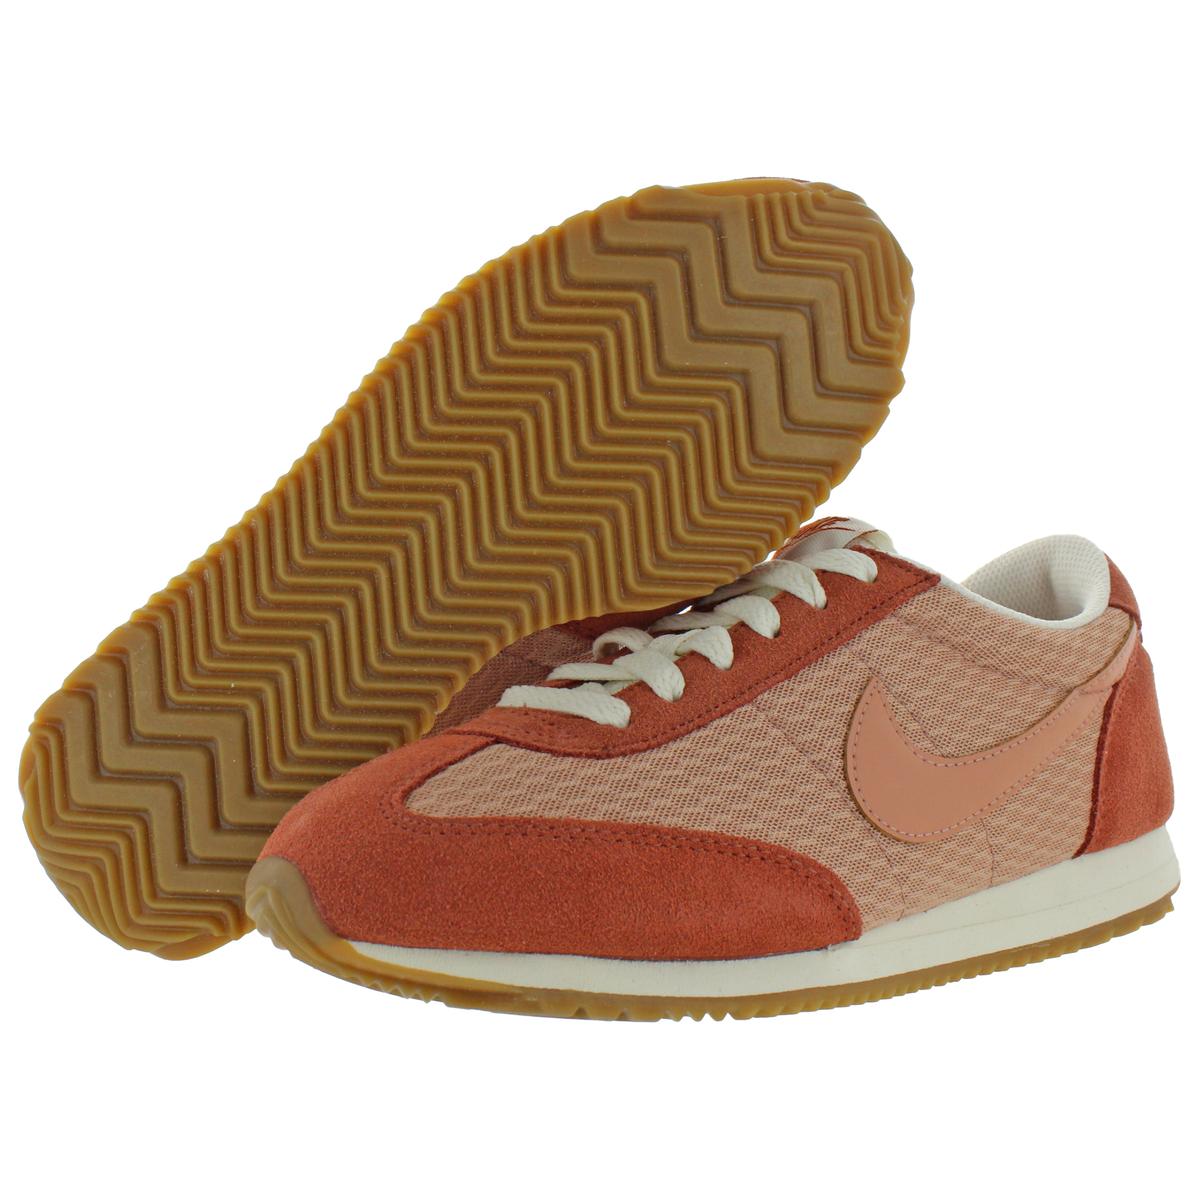  Nike  Womens Oceania Pink Suede Running Shoes Sneakers 7 5 